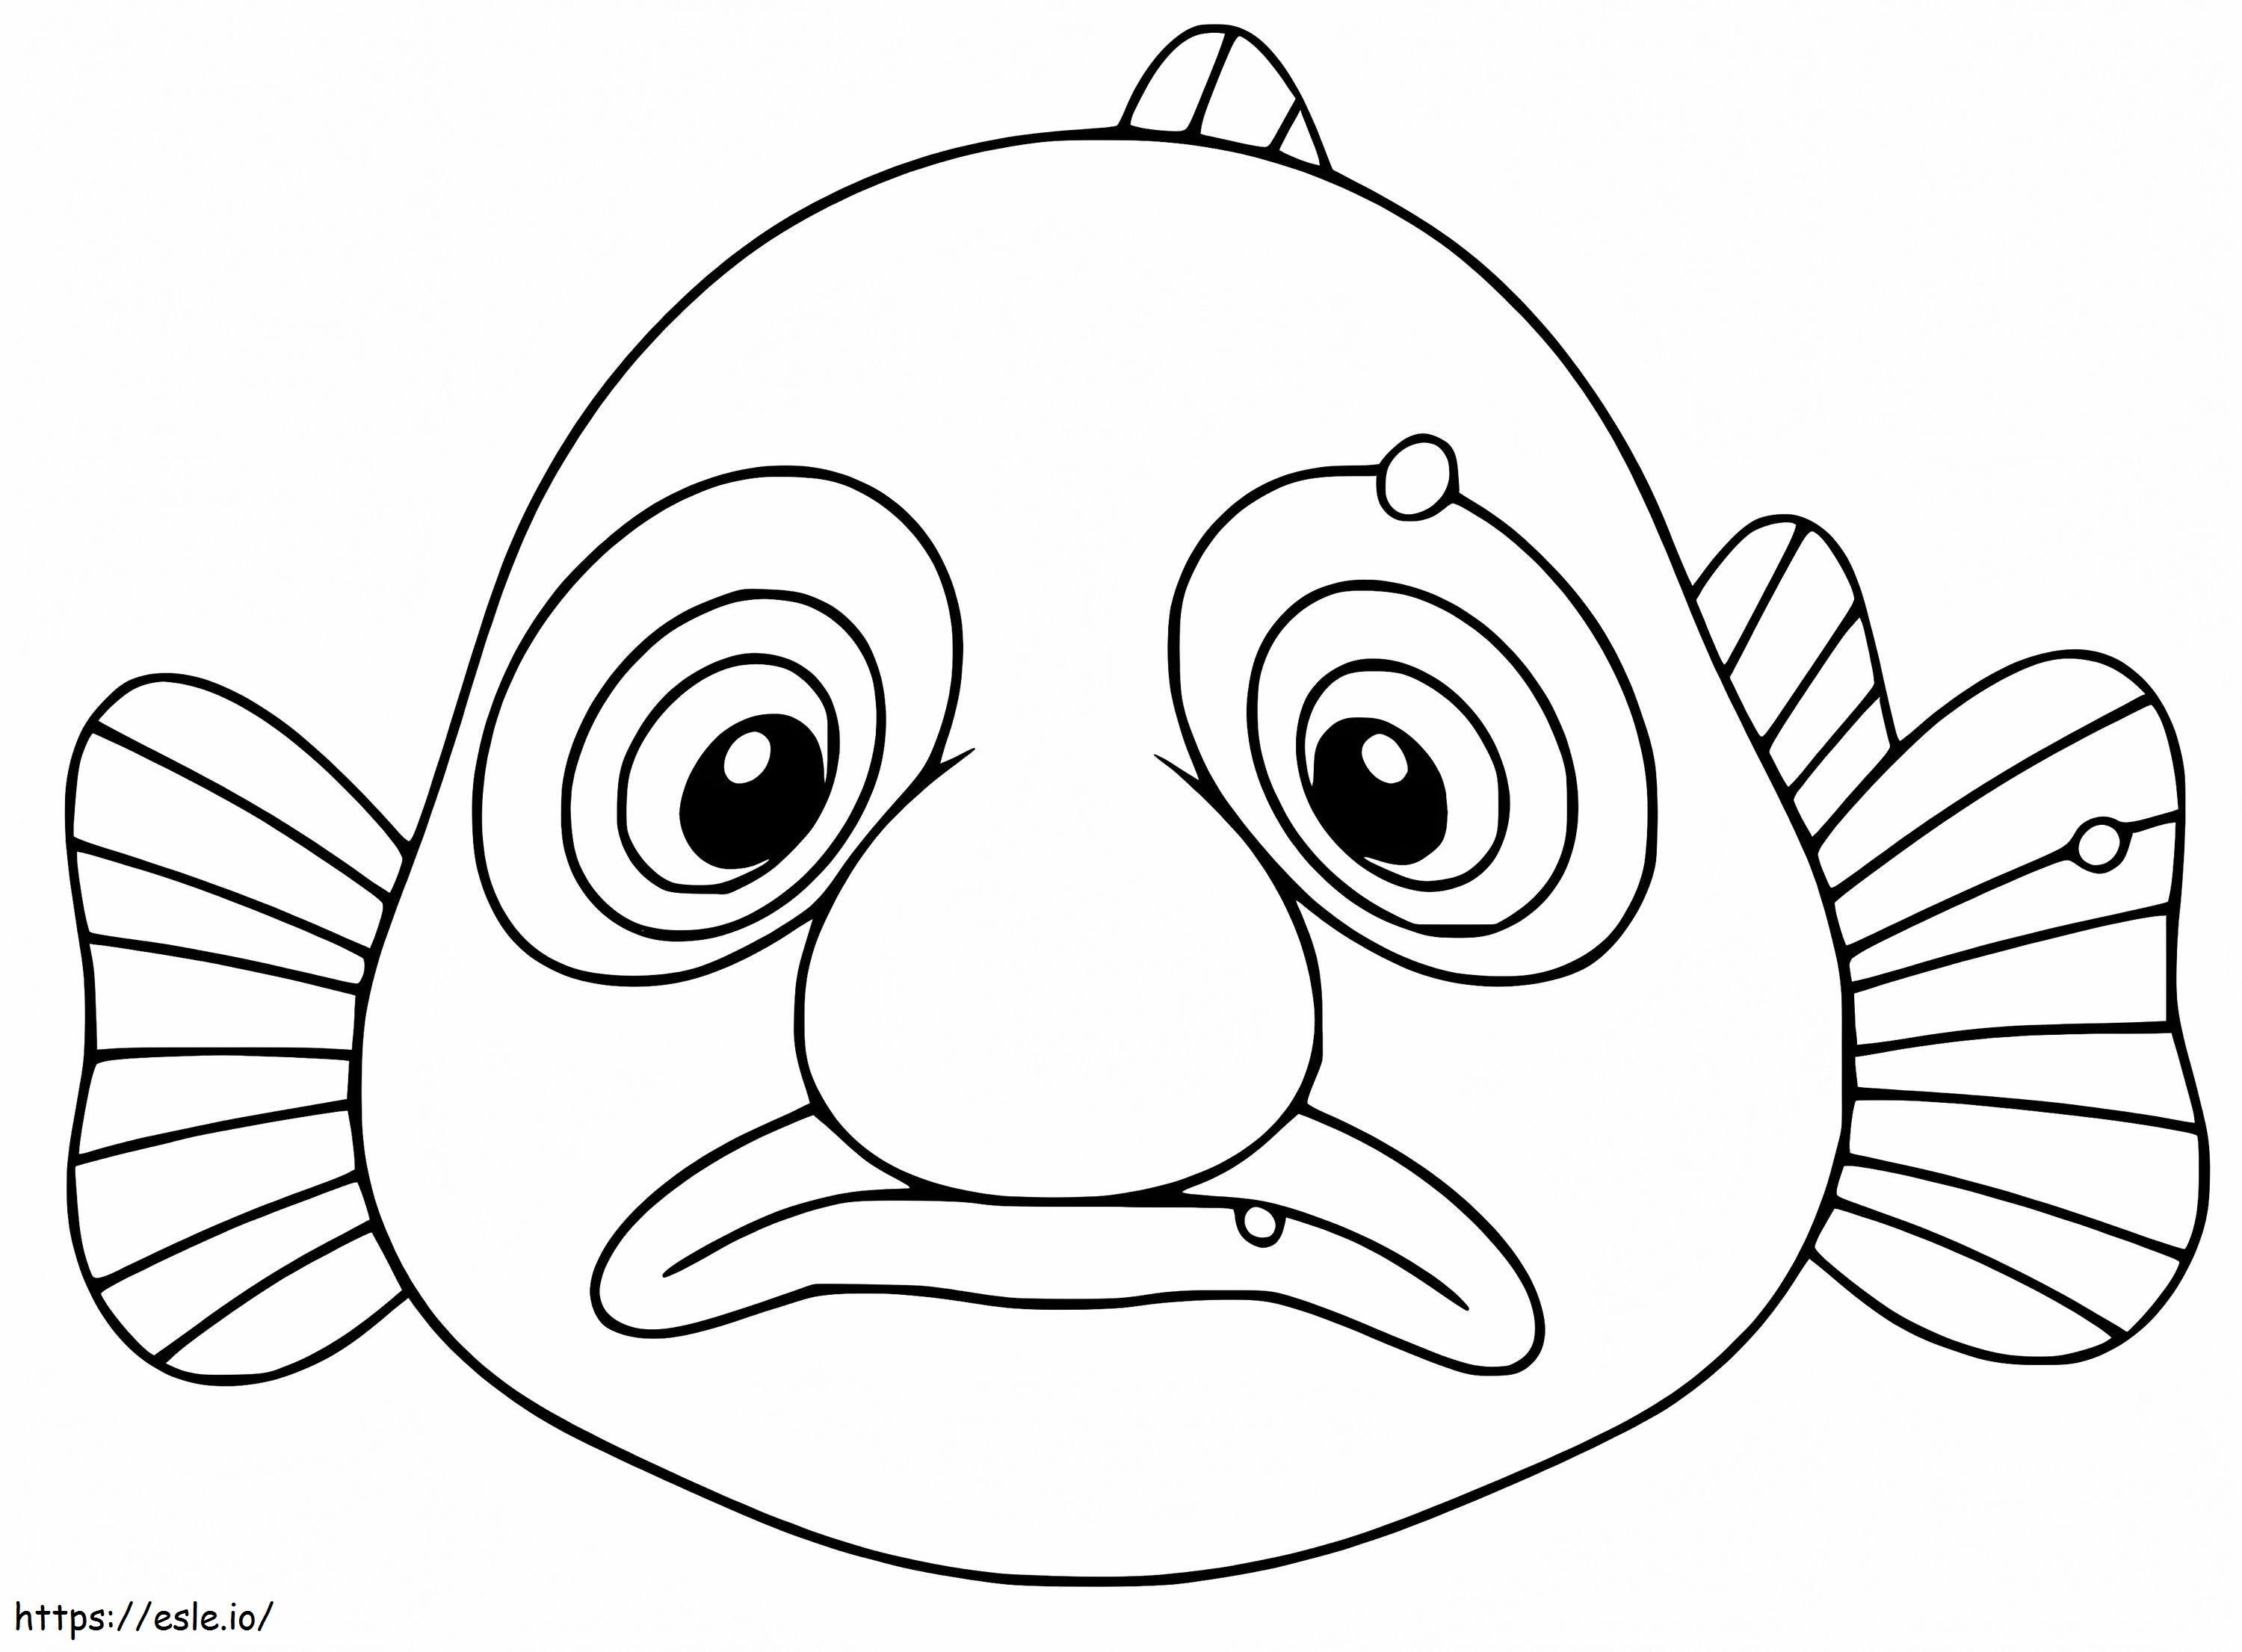 Coloriage dessin animé, blobfish à imprimer dessin